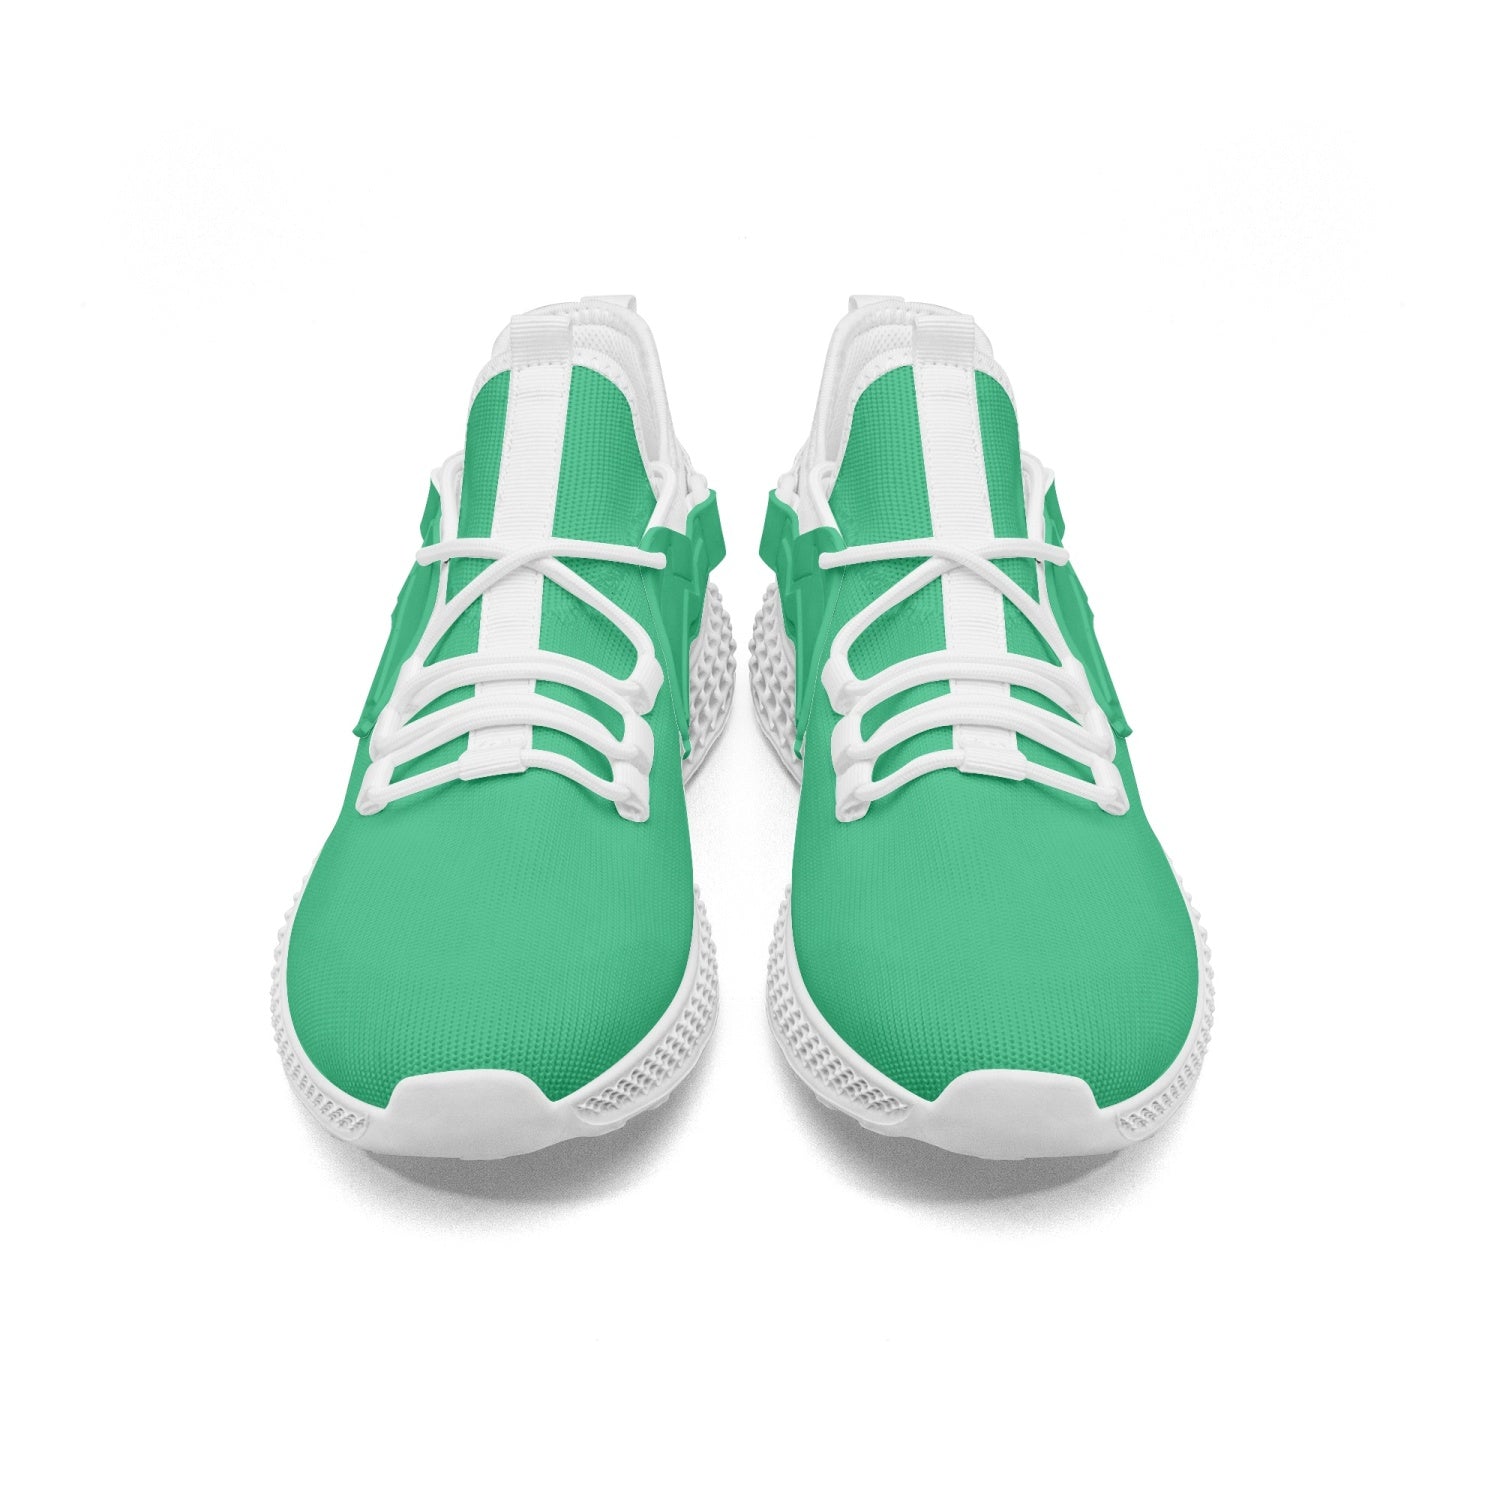 Unisex Summer Green Net Style Mesh Knit Sneakers